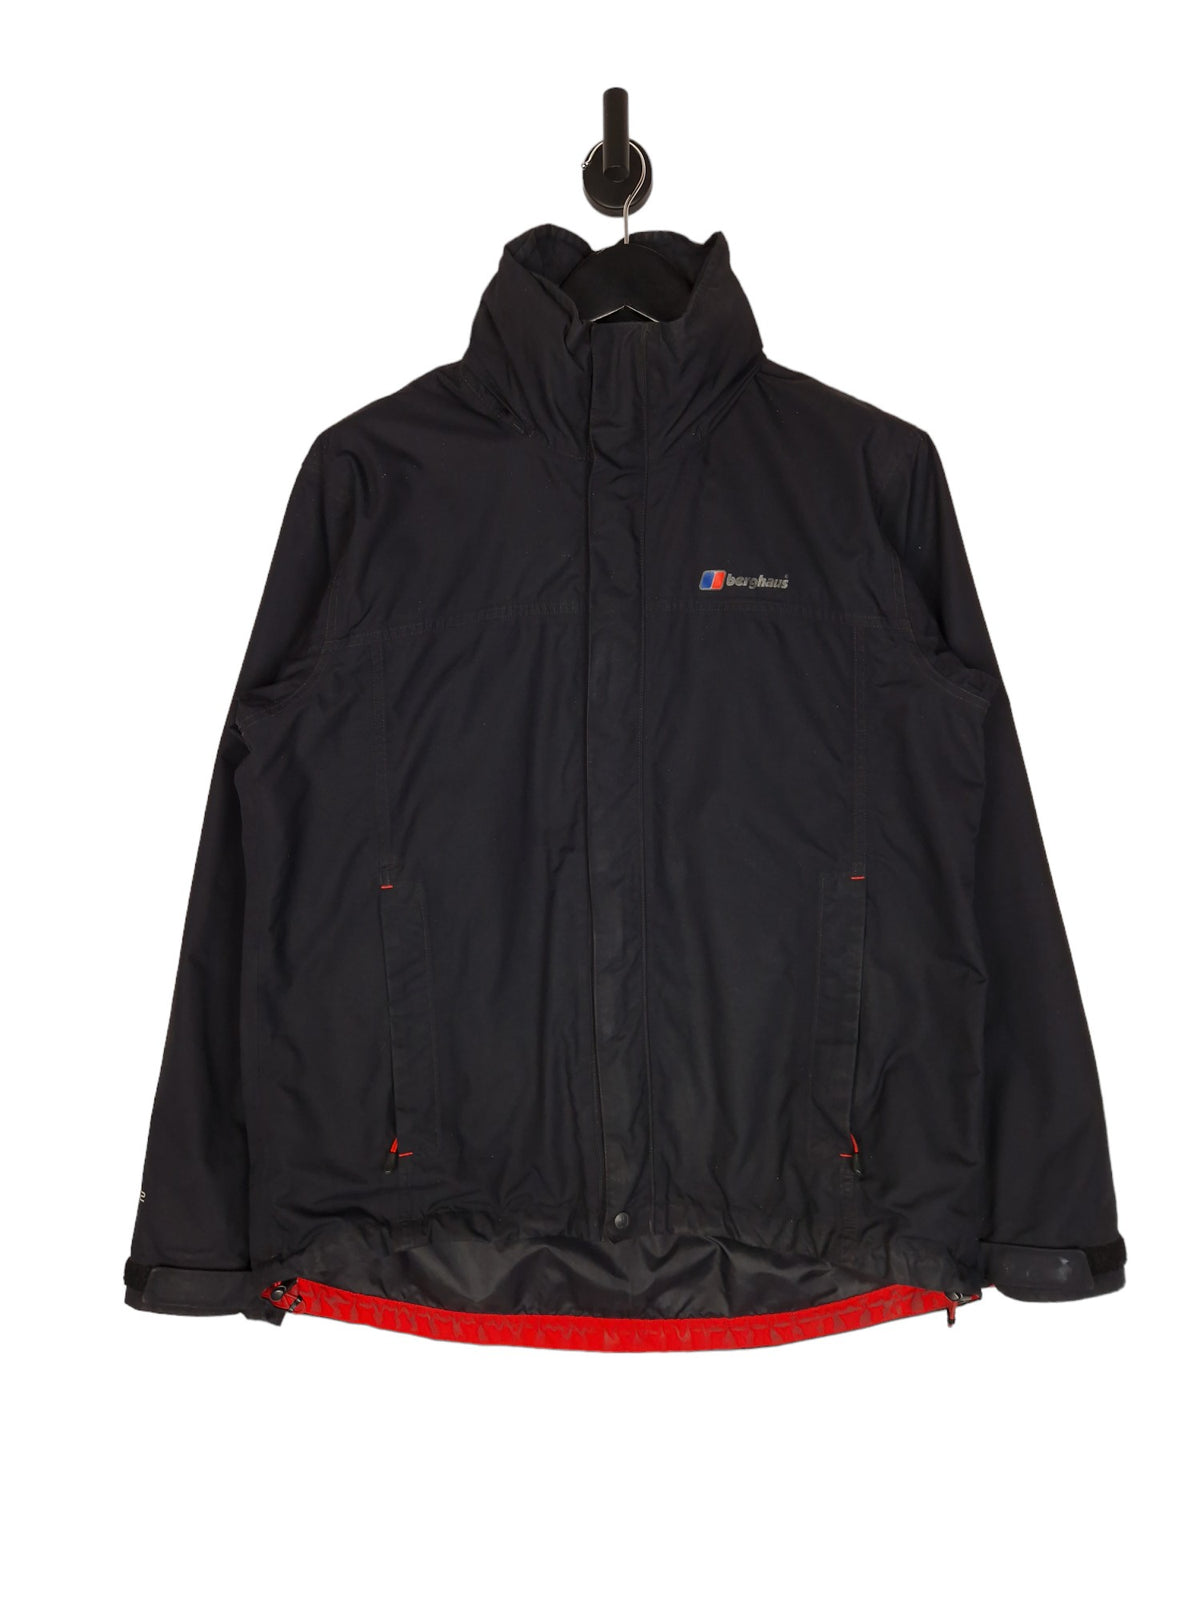 Berghaus AQ2 Rain Jacket - Size Medium